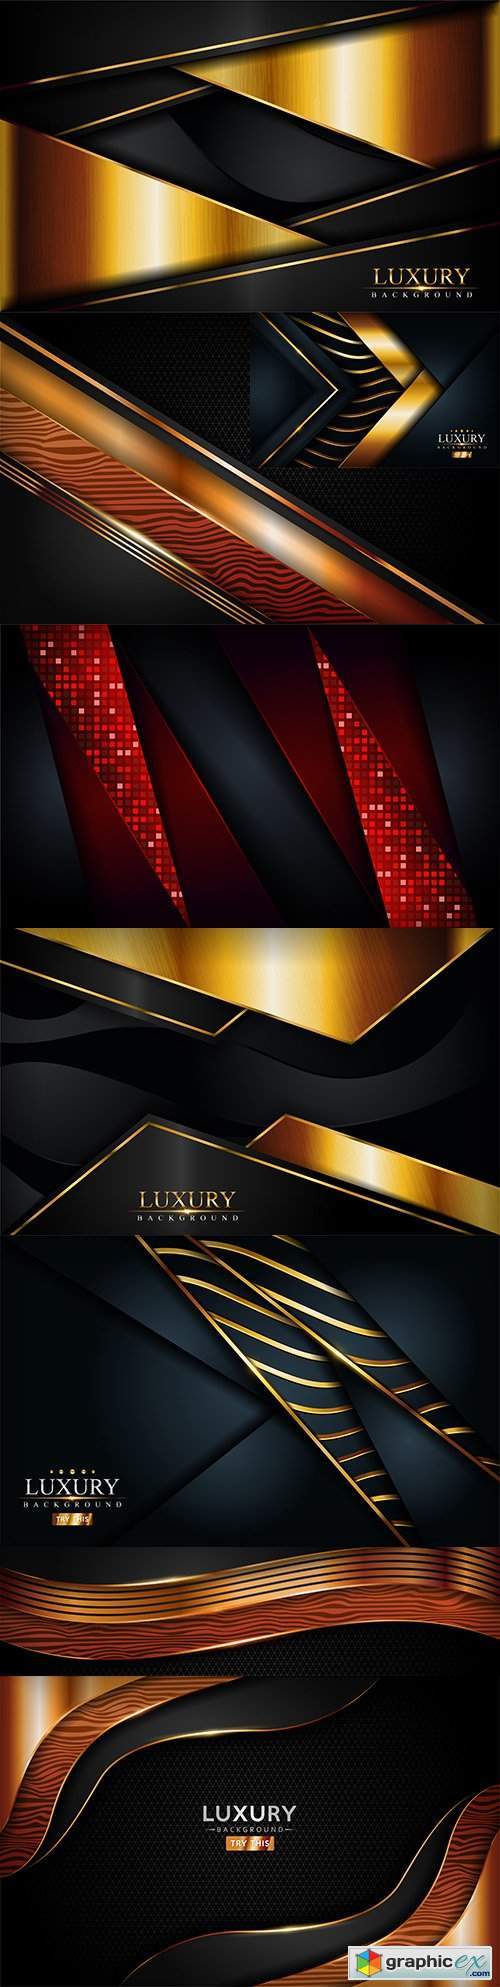 Luxury abstract dark background with golden element